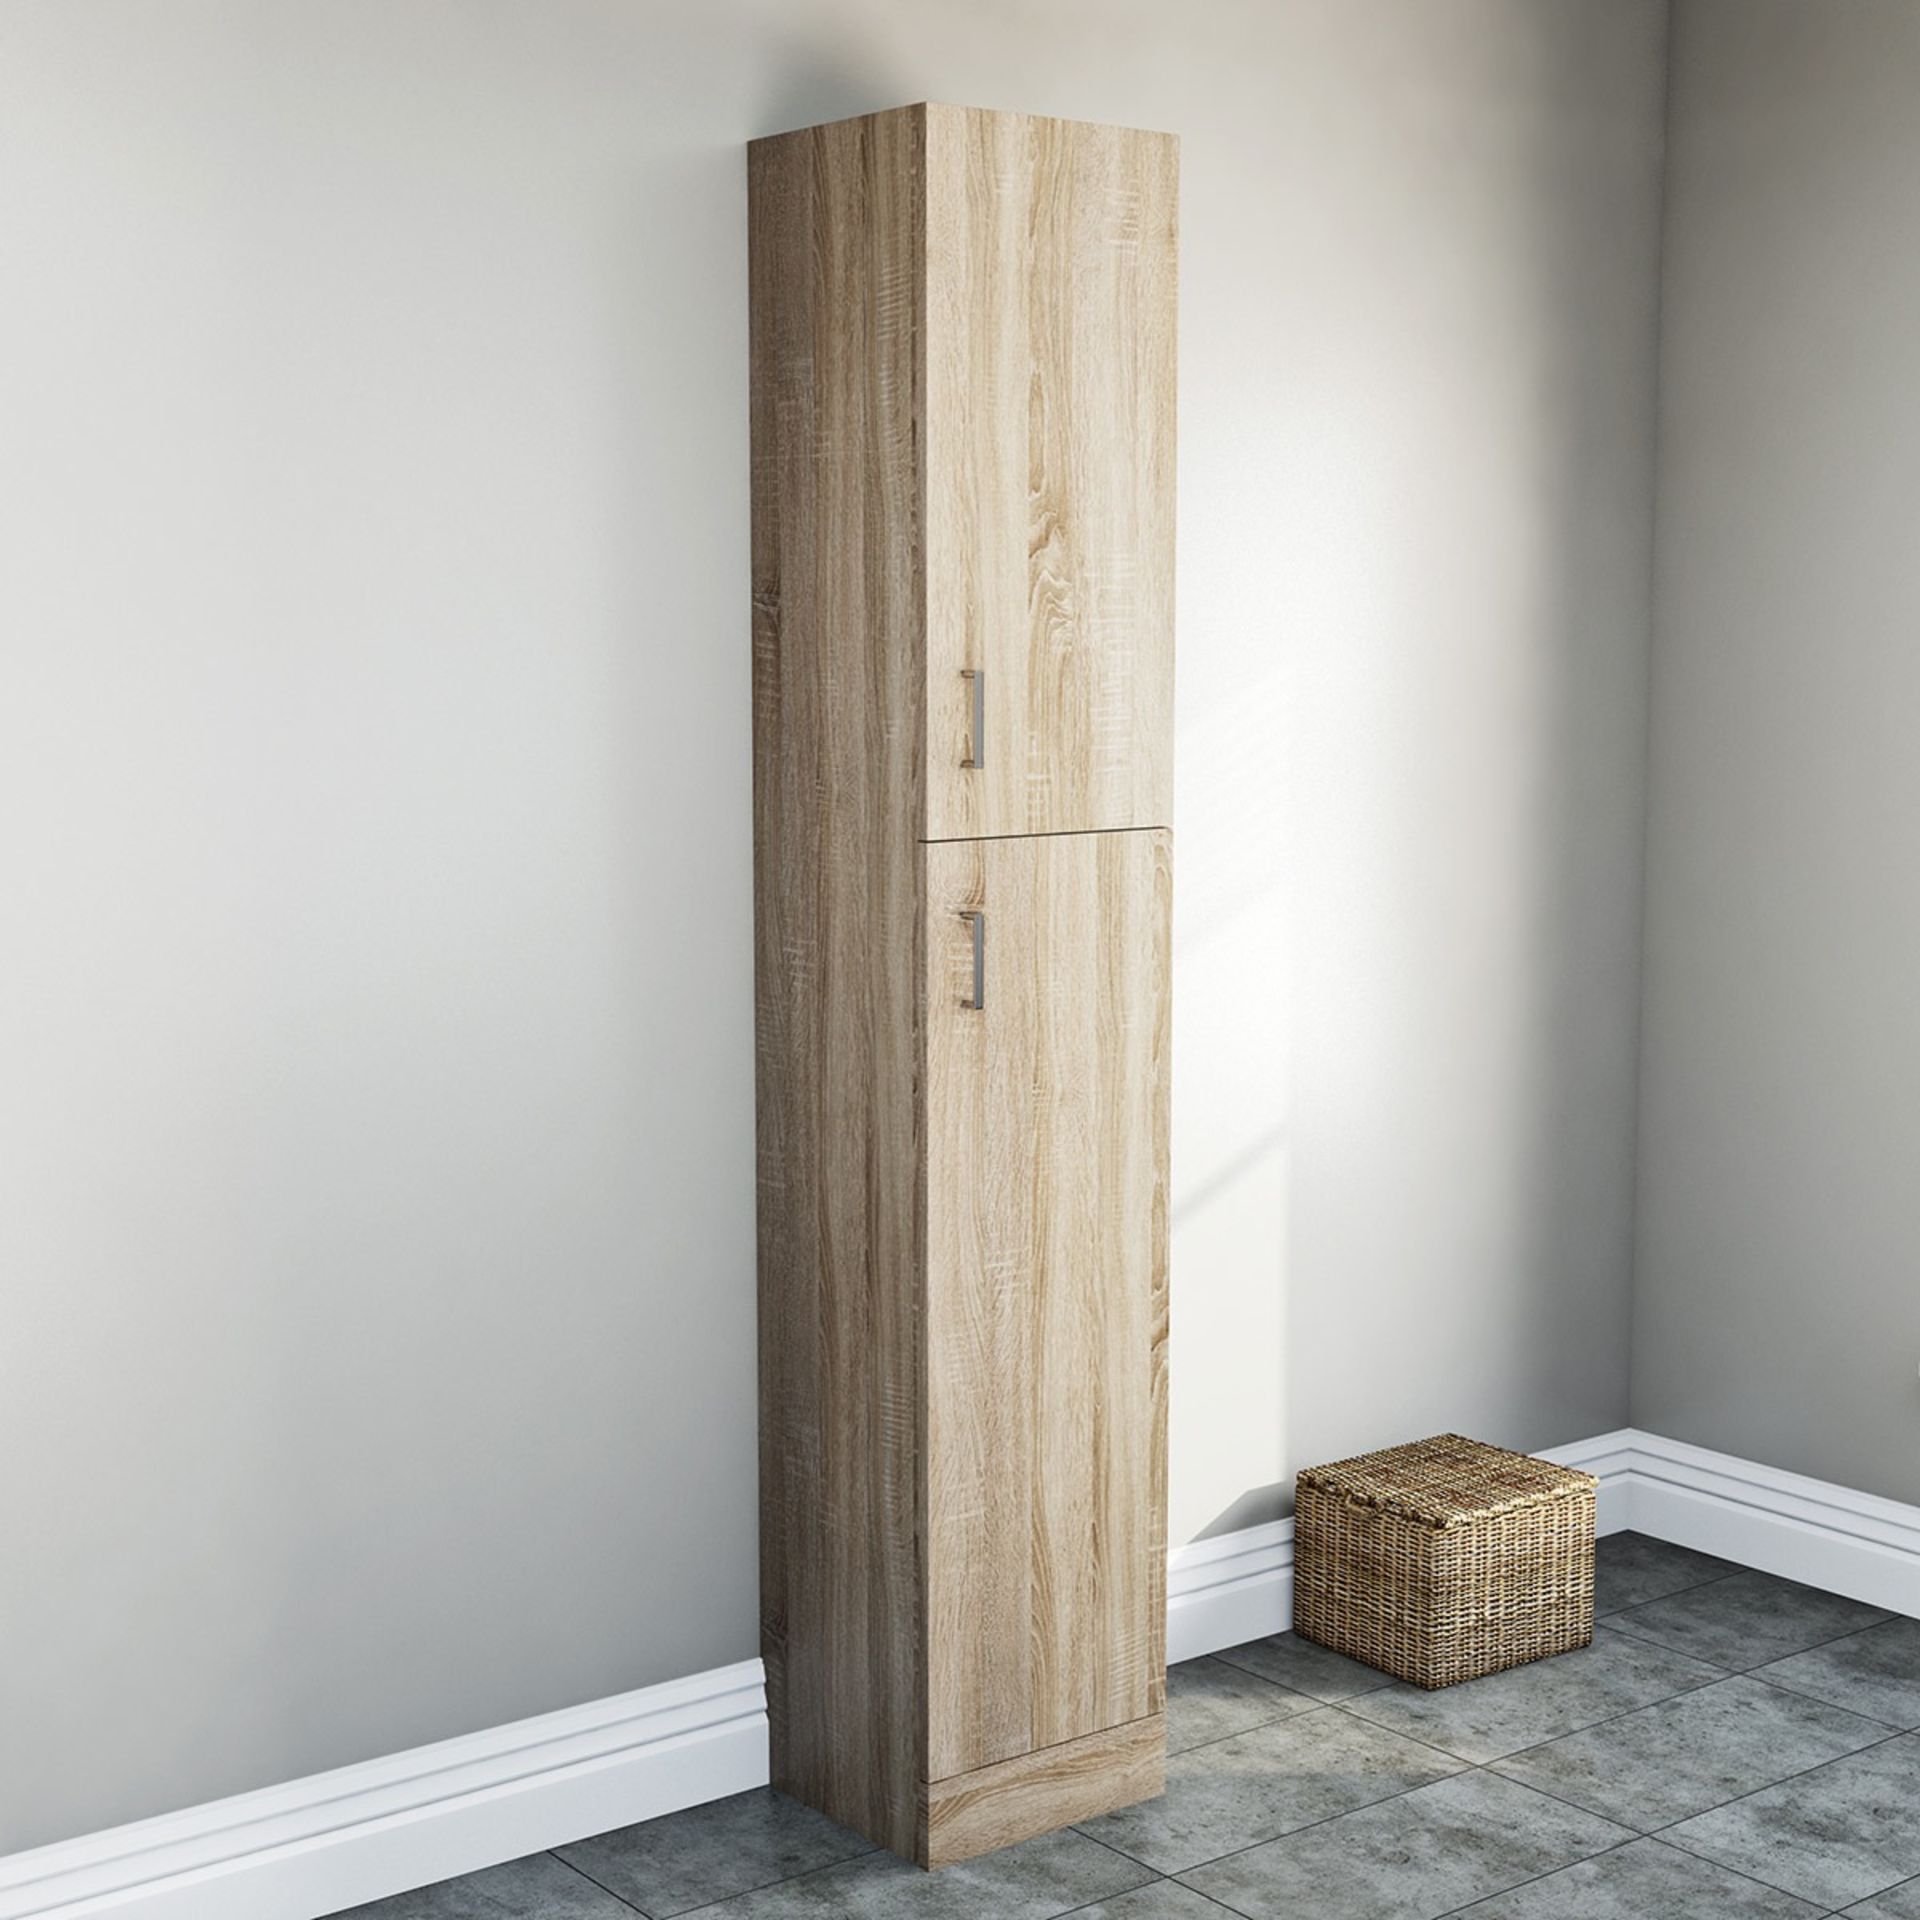 1 x Sienna Oak 300mm Tall Bathroom Storage Unit - Unused Stock - CL190 - Ref BR067 - Location: - Image 4 of 5